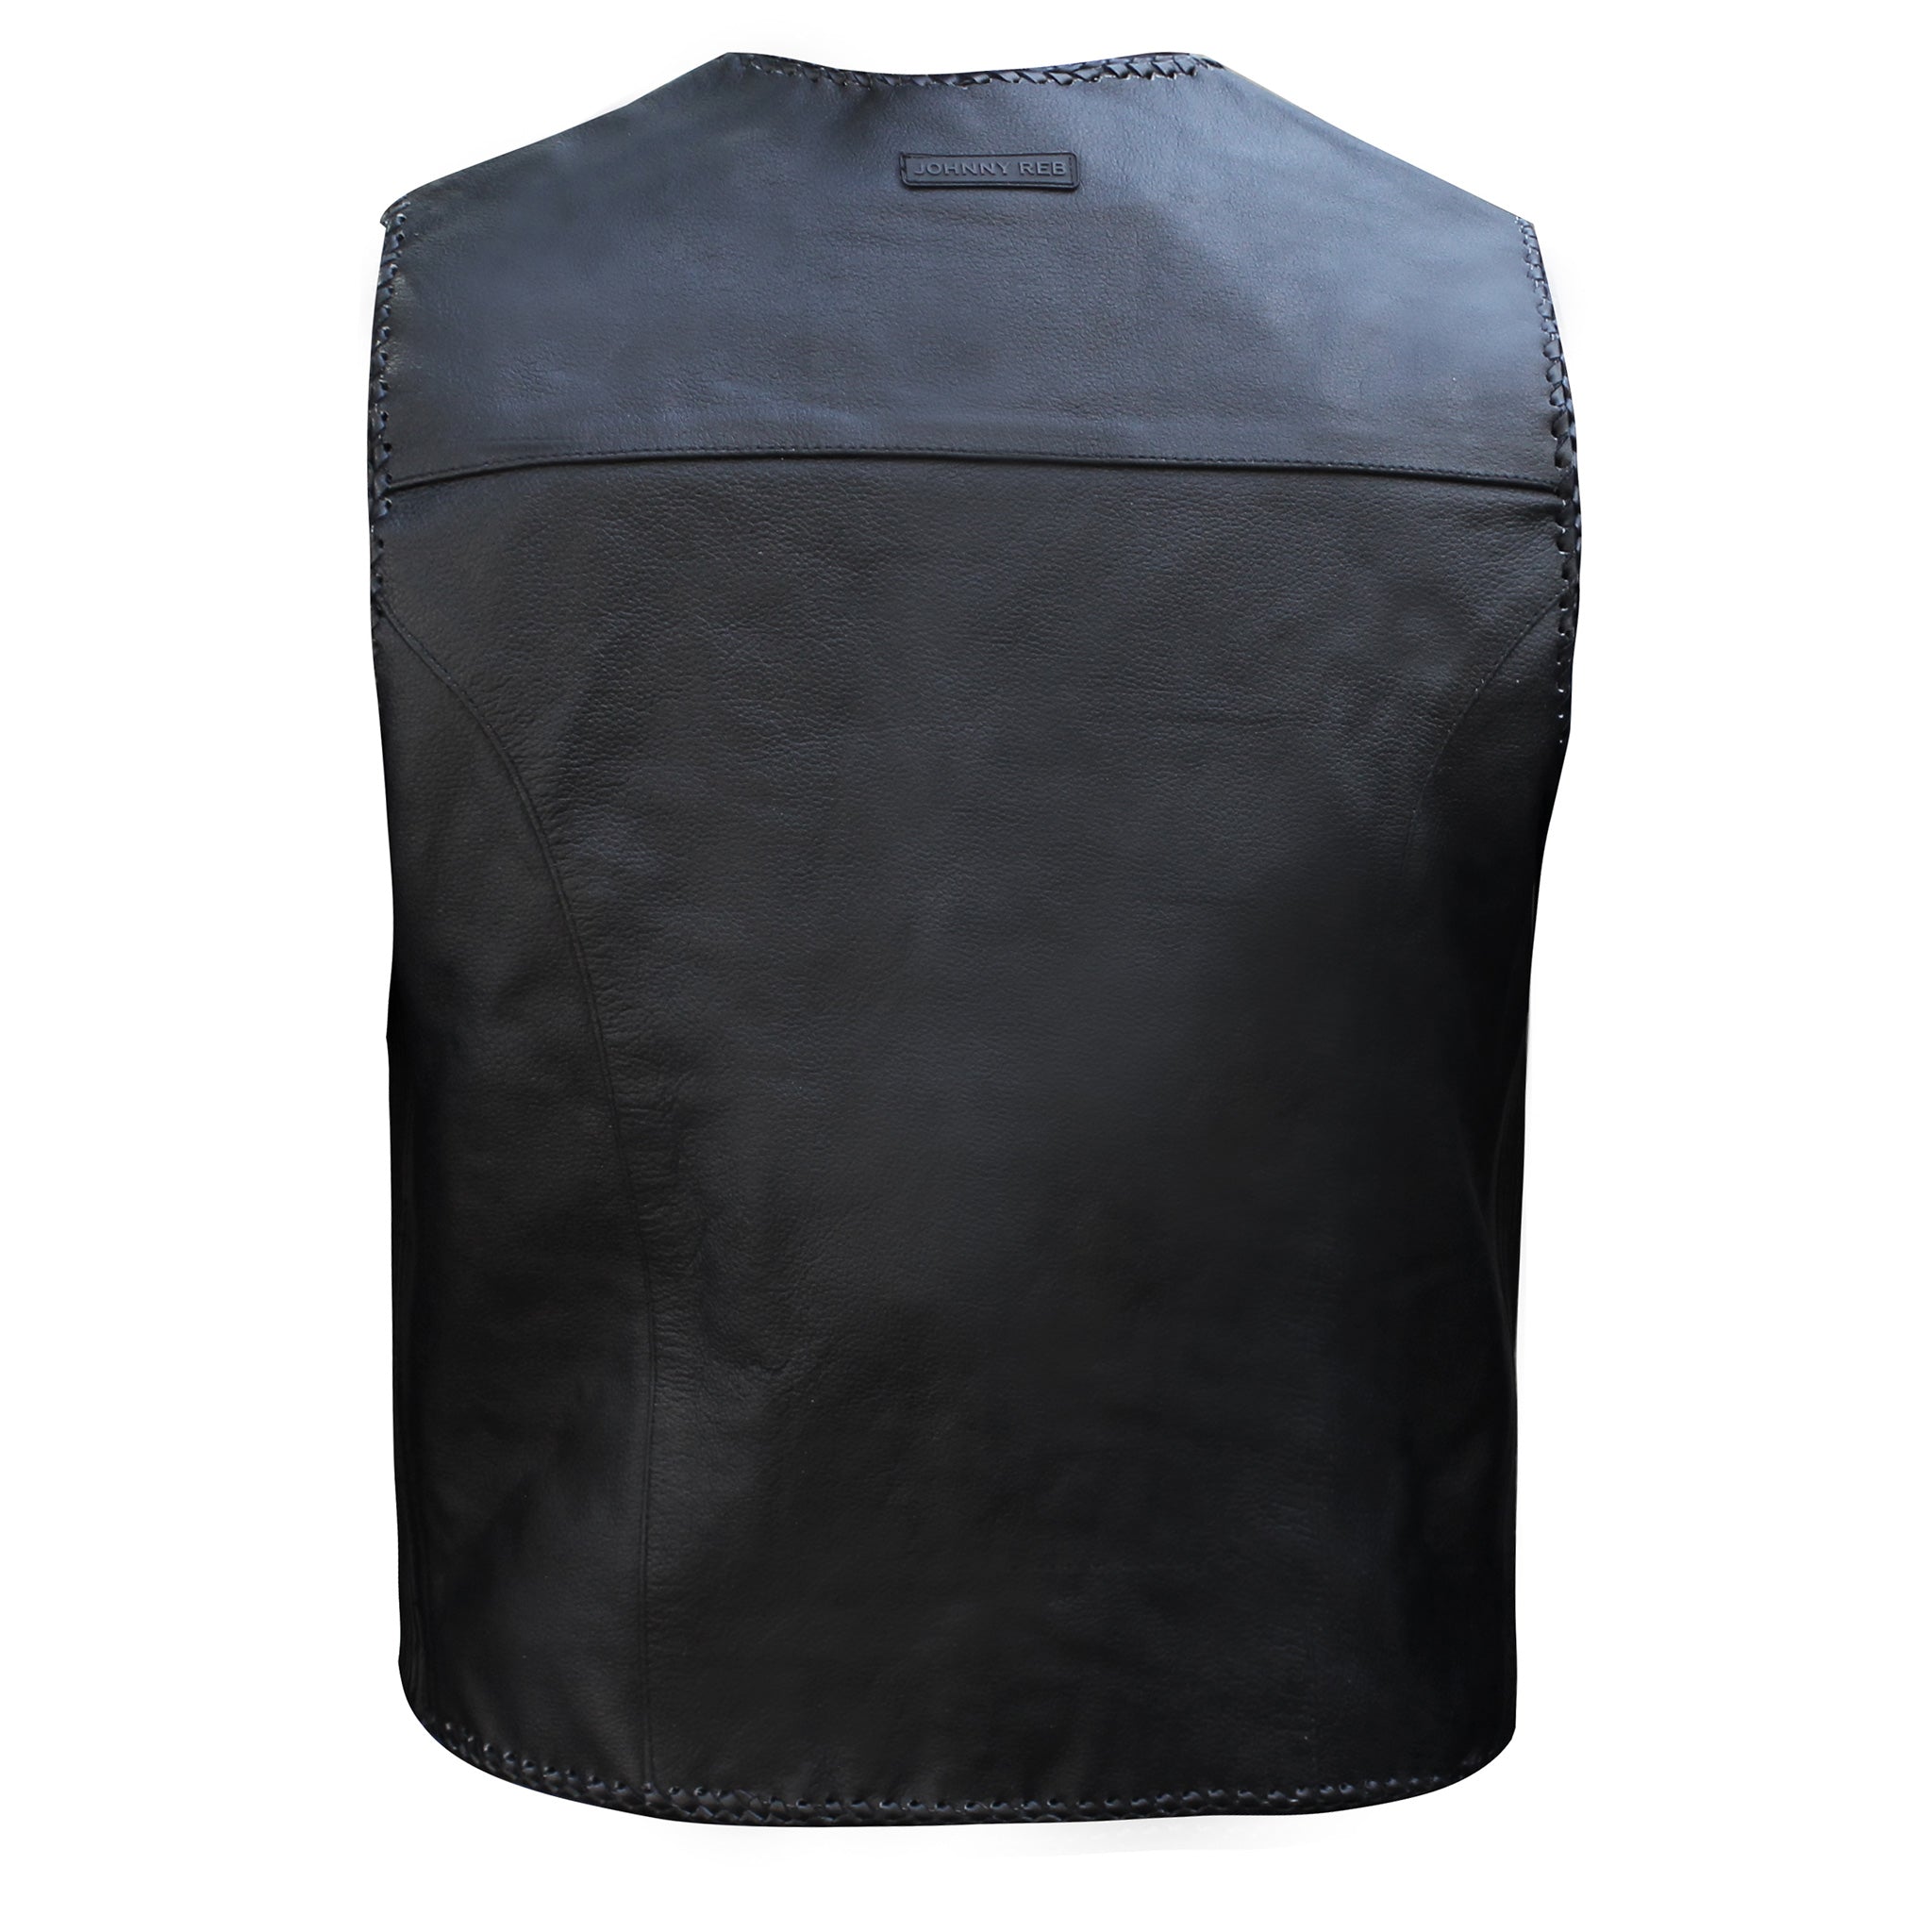 Men's Murray Leather Vest